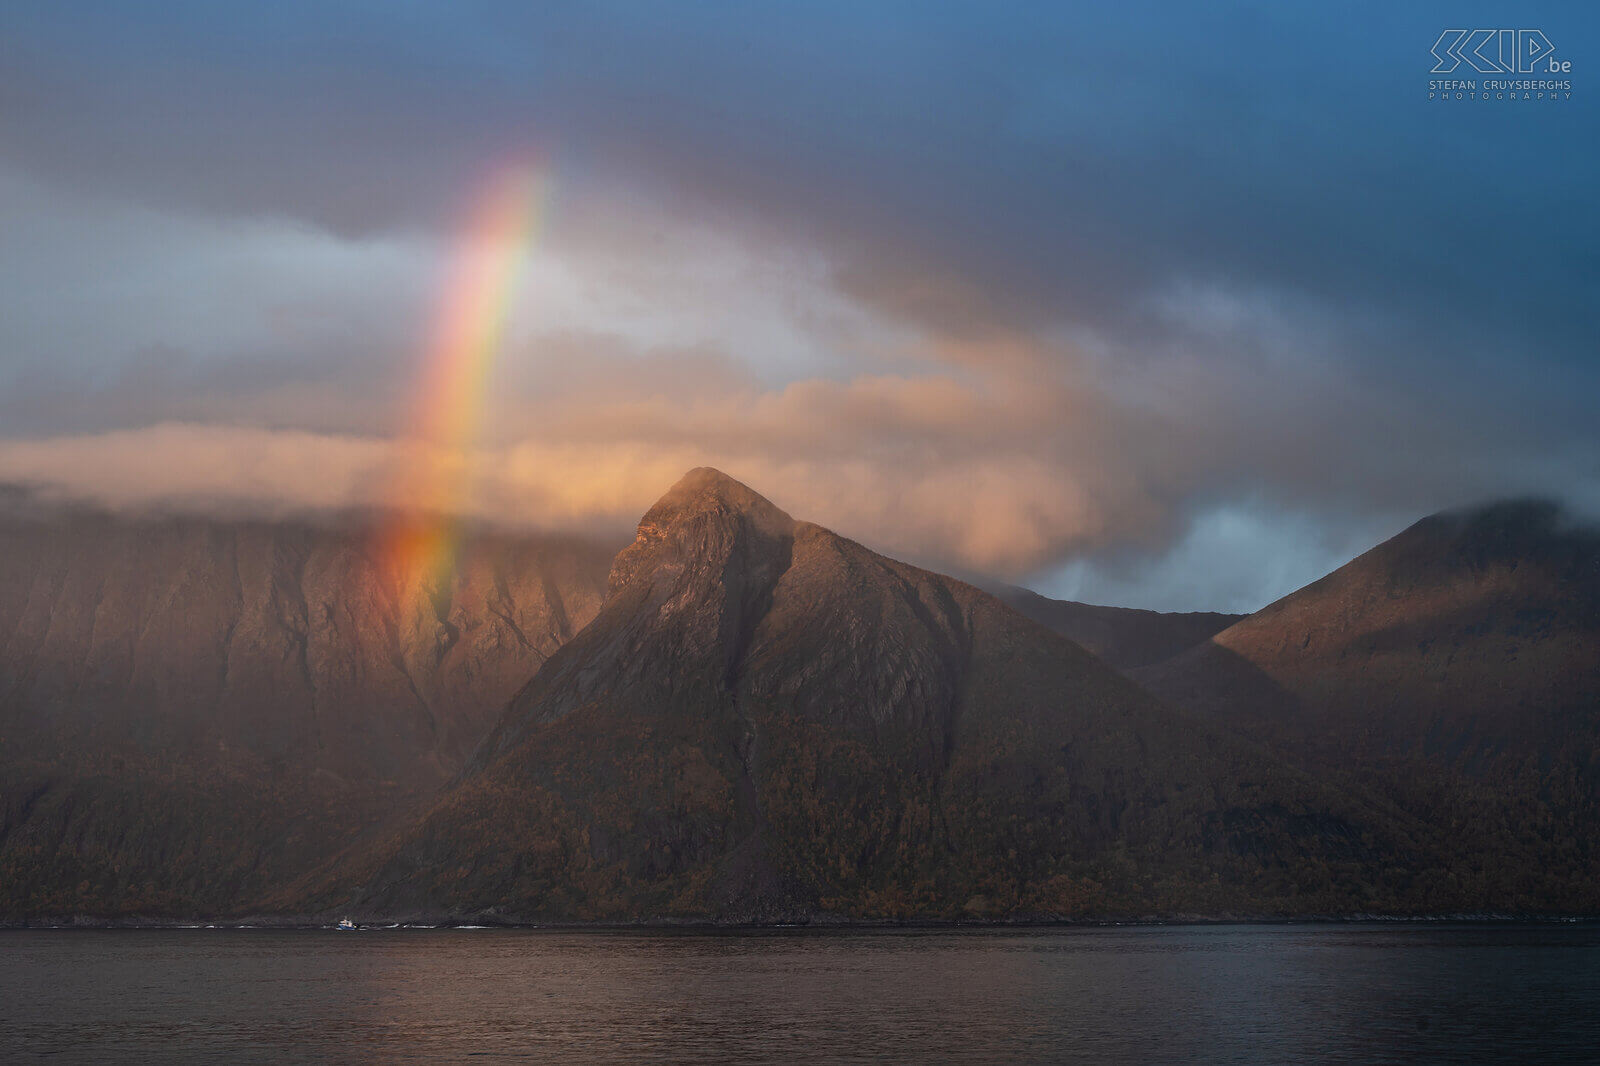 Senja - Mefjordvaer - Rainbow A rainbow after some heavy rain showers in Mefjordvaer Stefan Cruysberghs